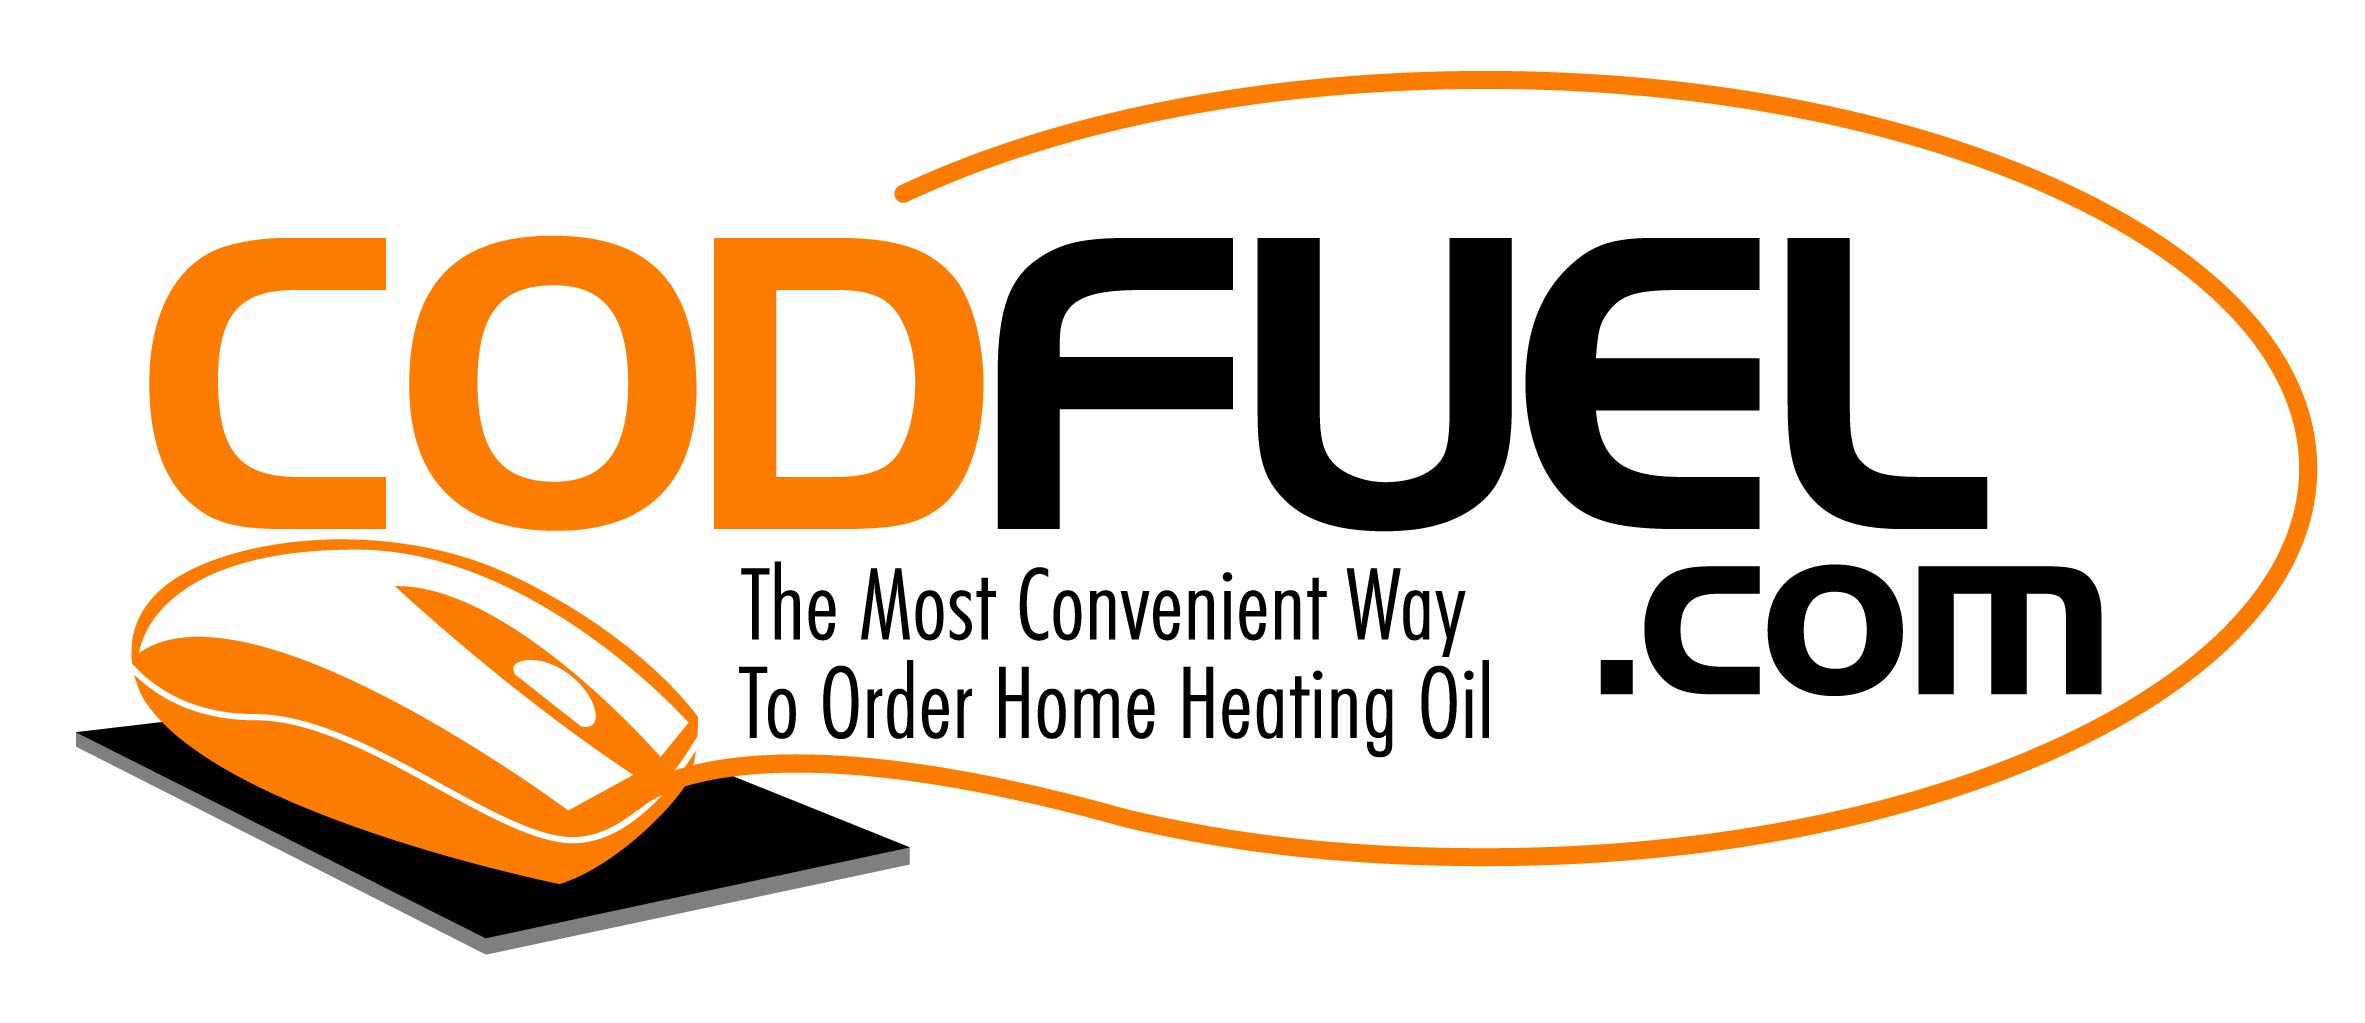 Codfuel.com Home Heating Oil